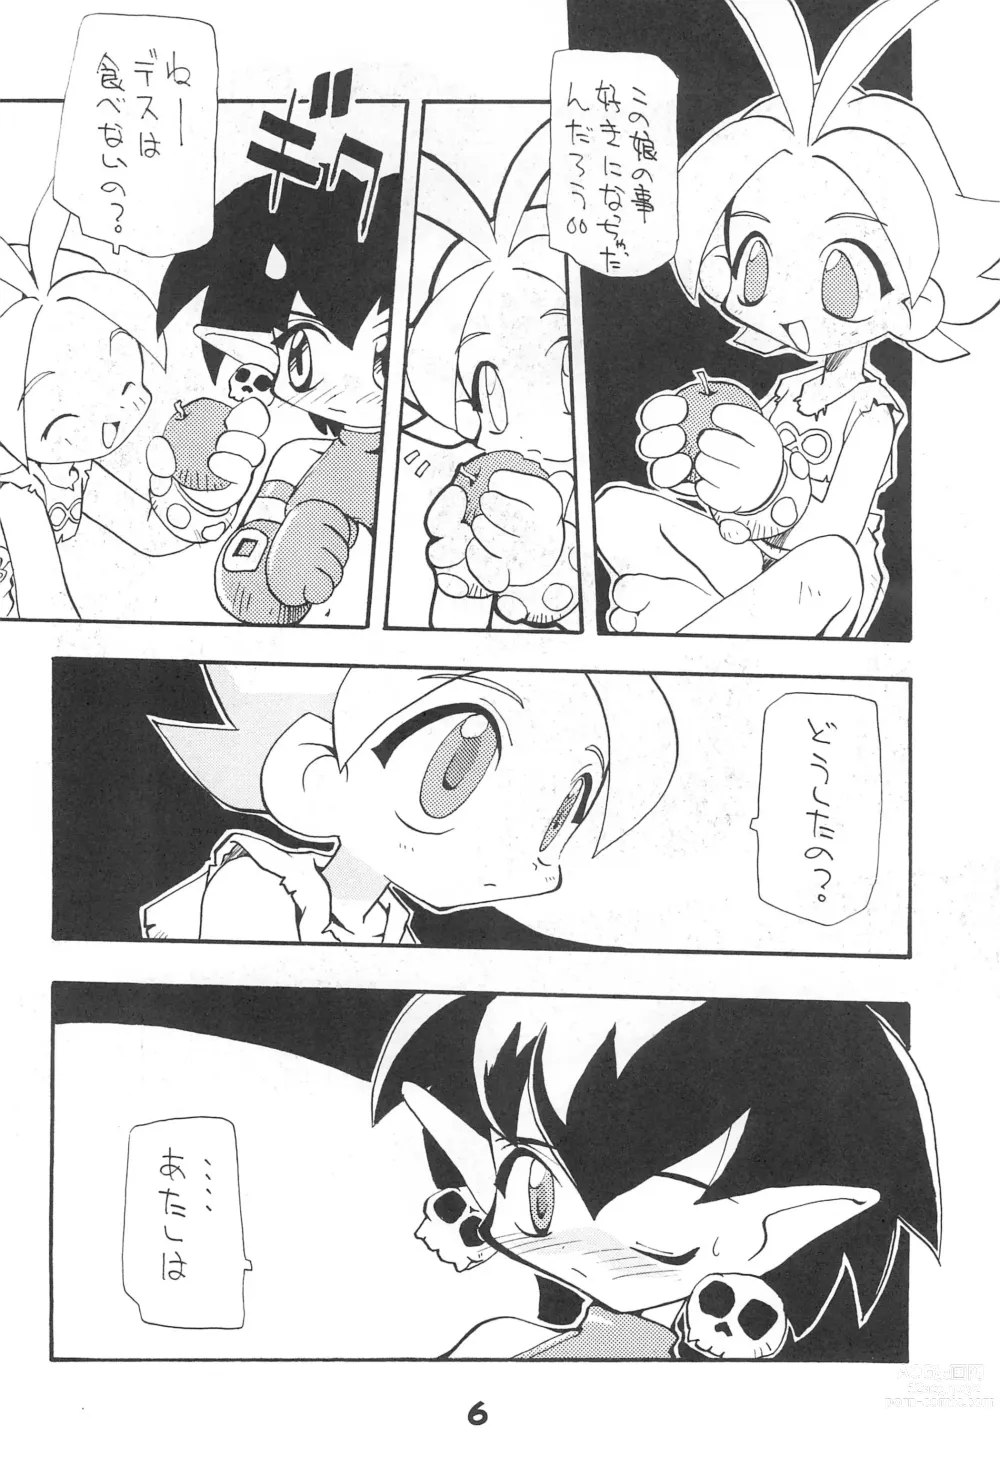 Page 6 of doujinshi MAGICAL BACK DROP